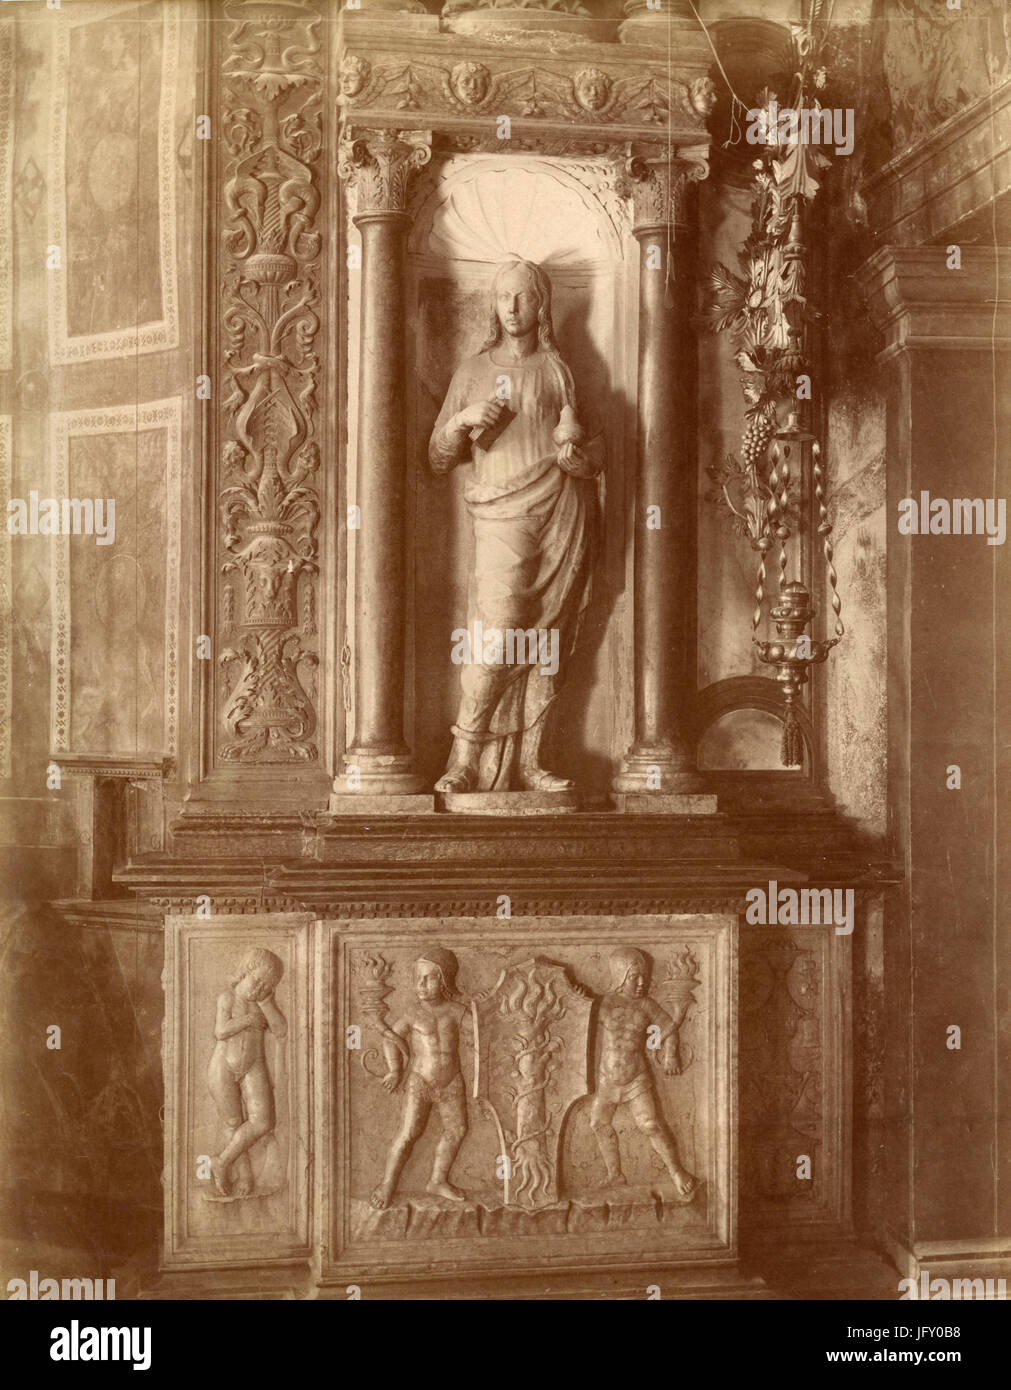 Hl. Magdalena, Detail des Altars Maniscalchi von Rizzo, Verona, Italien Stockfoto